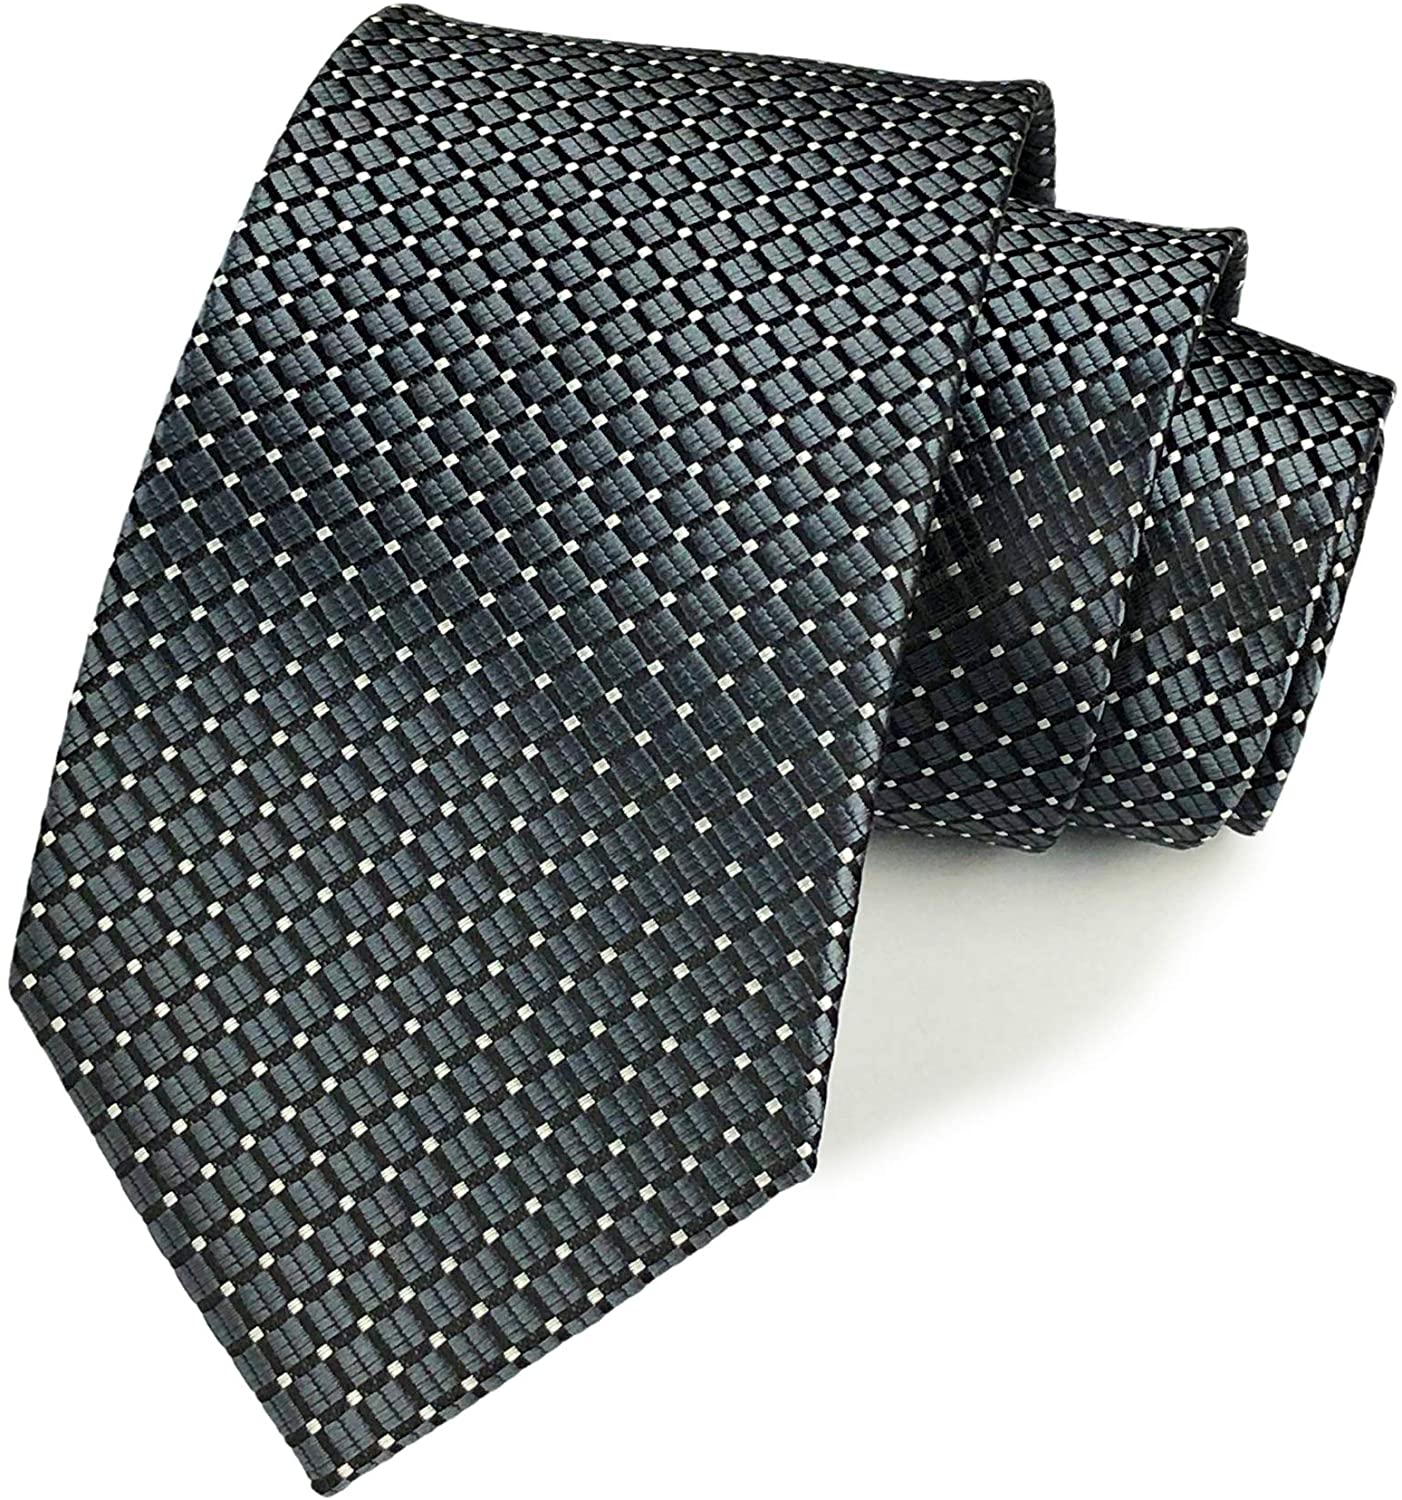 Secdtie Men's Classic Checks Dark Blue Grey Jacquard Woven Silk Tie Necktie 